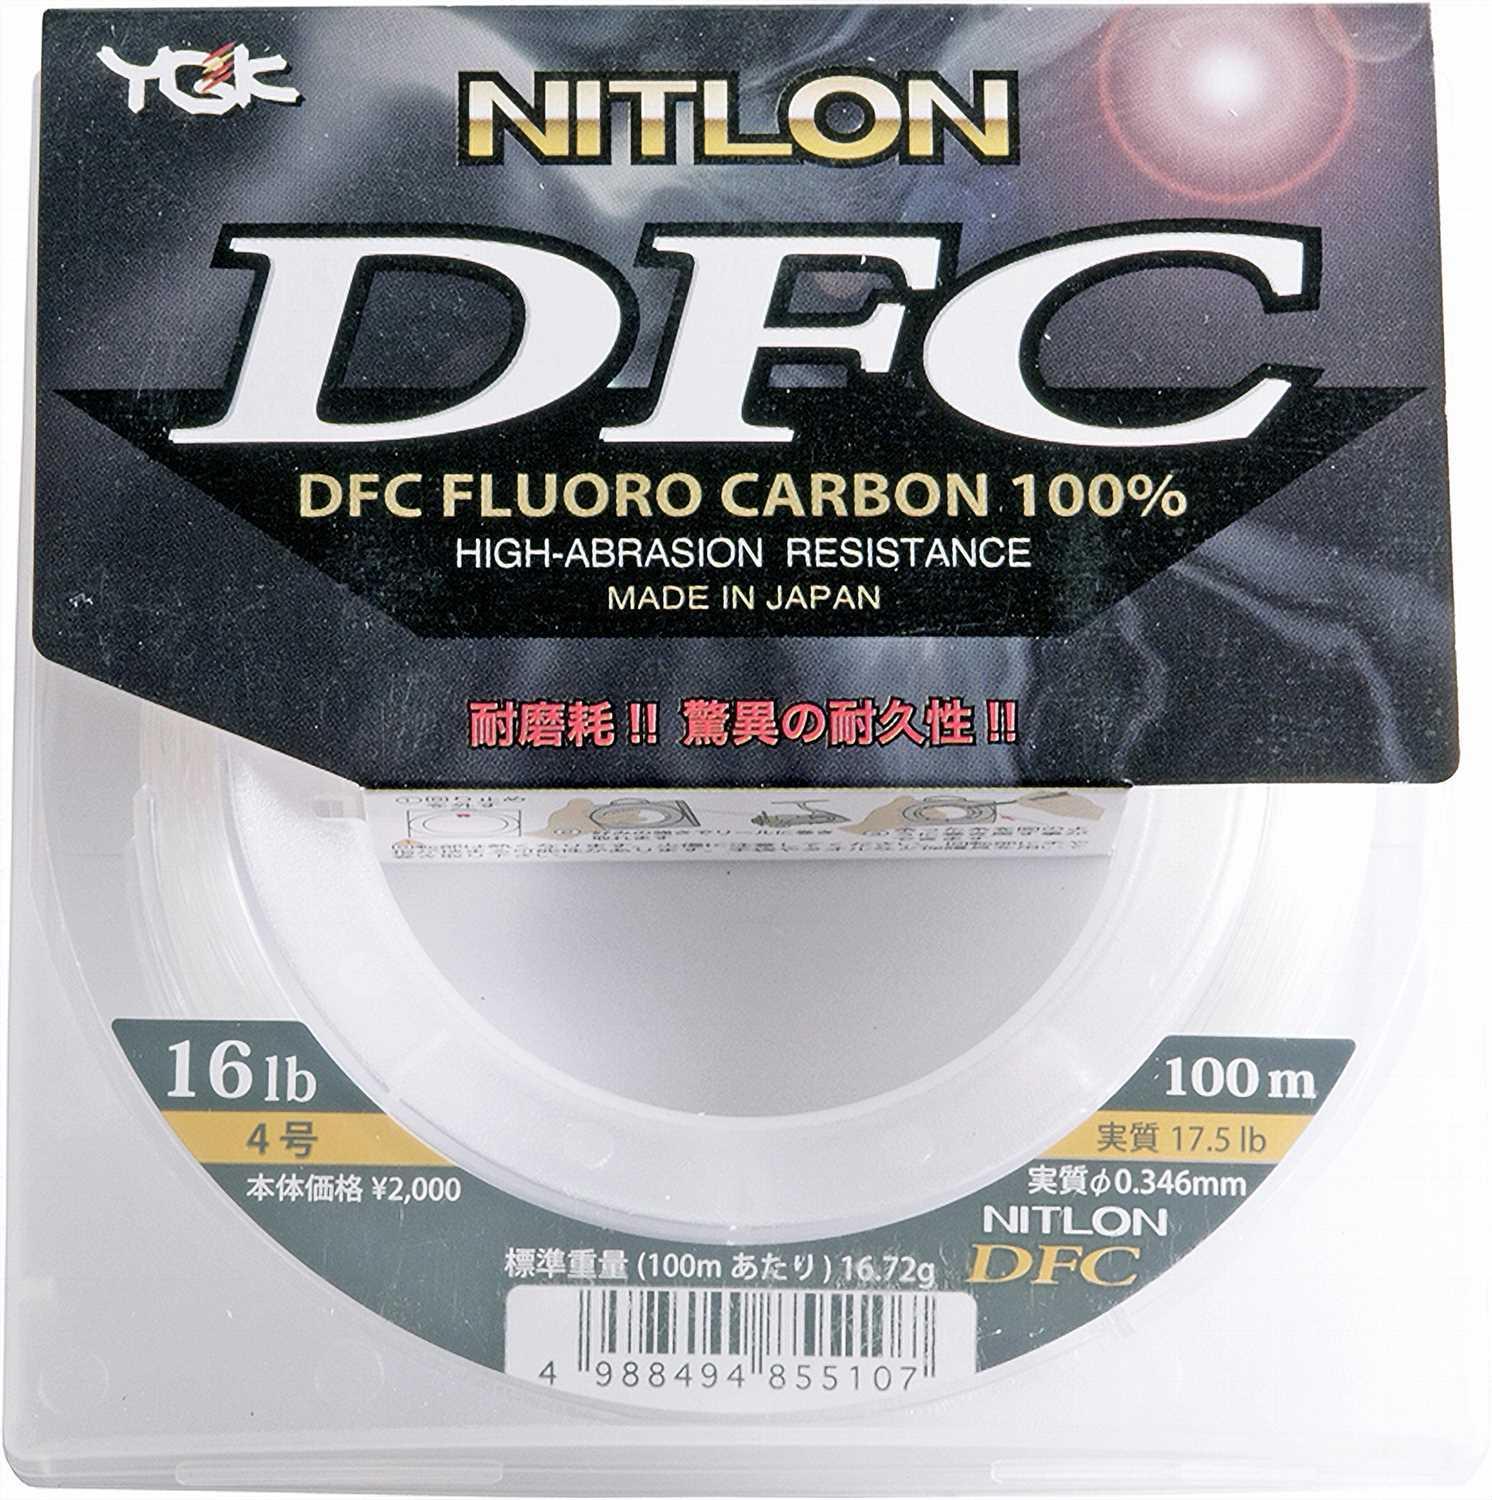 YGK Nitlon DFC Fluorocarbon